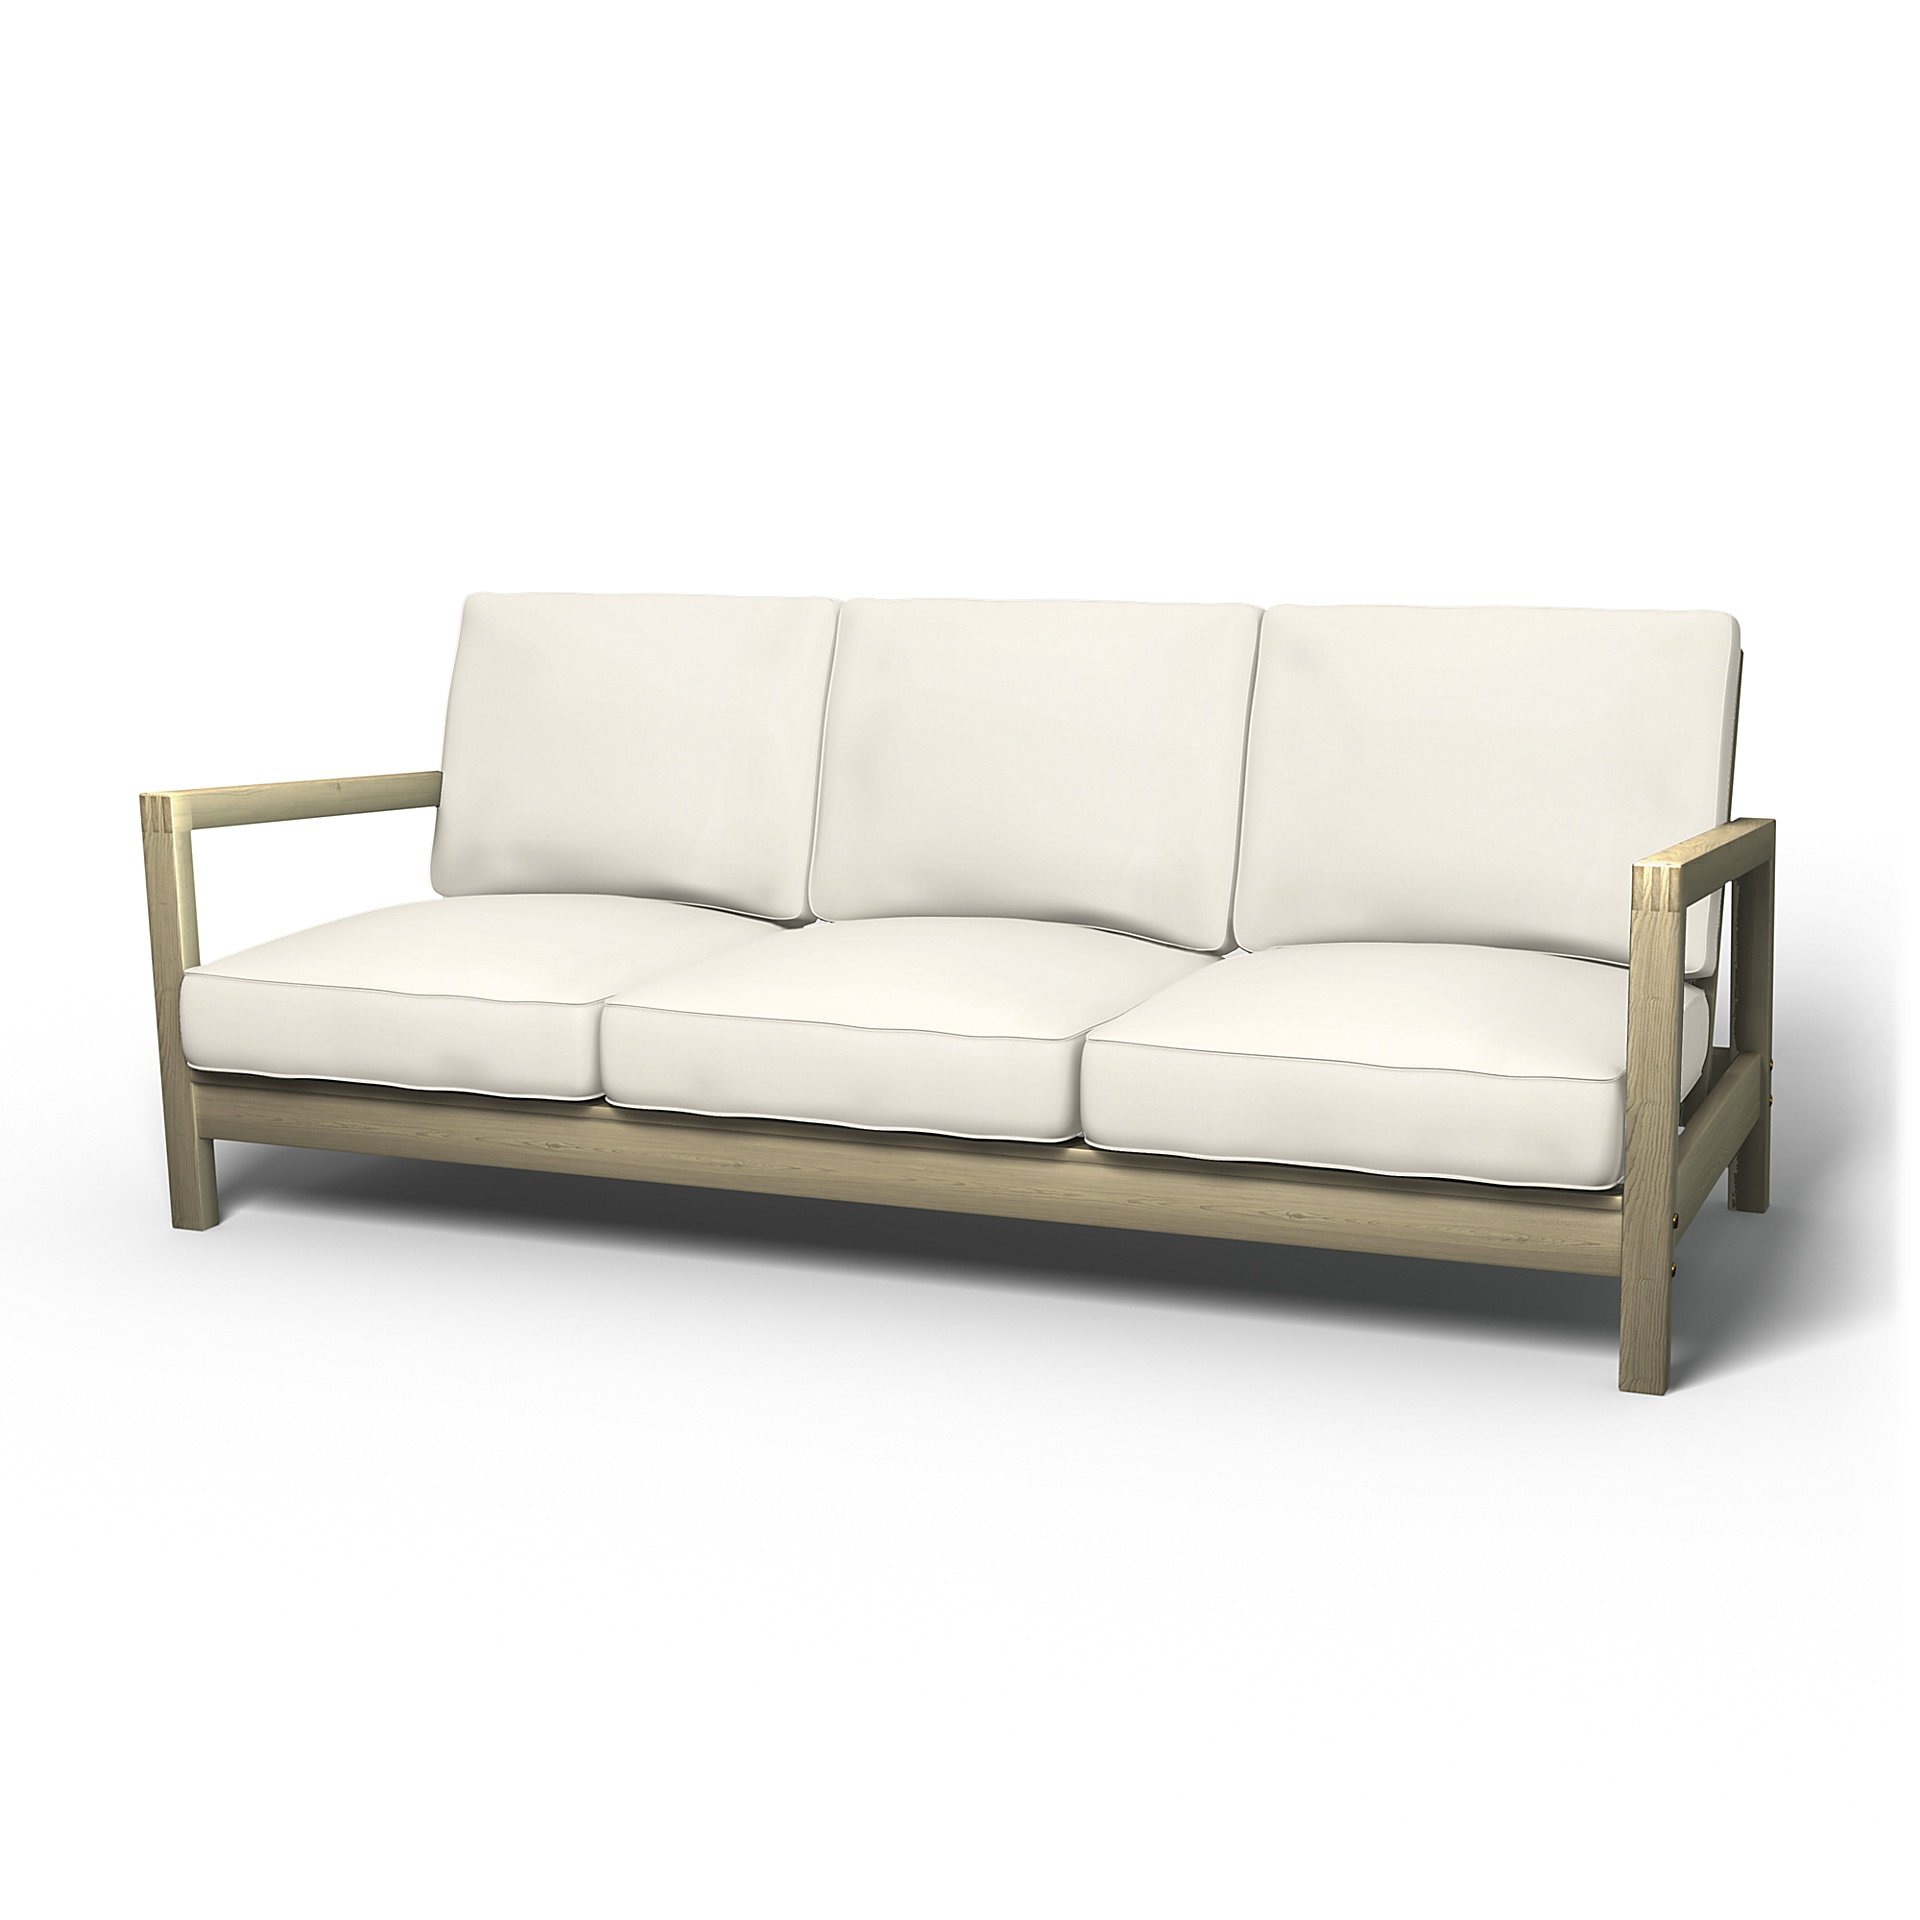 IKEA - Lillberg 3 Seater Sofa Cover, Mole Brown, Boucle & Texture - Bemz